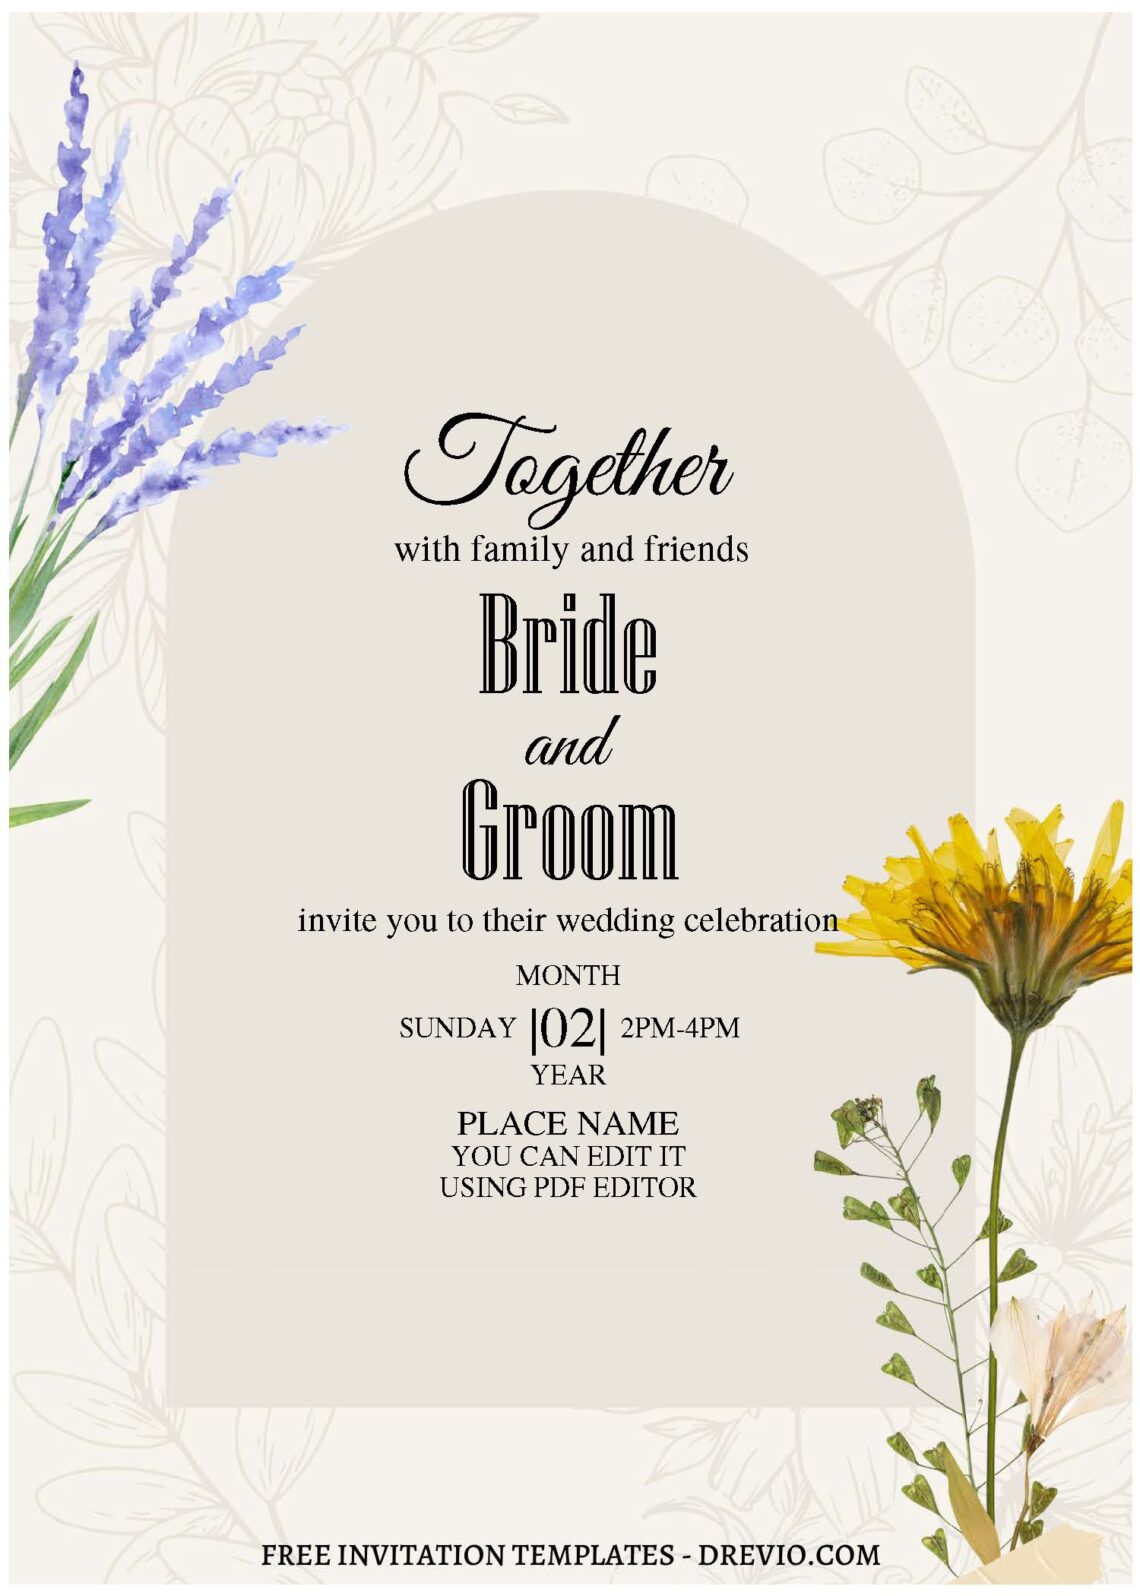 (Free Editable PDF) Whimsical Spring Garden Wedding Invitation Templates with purple azalea